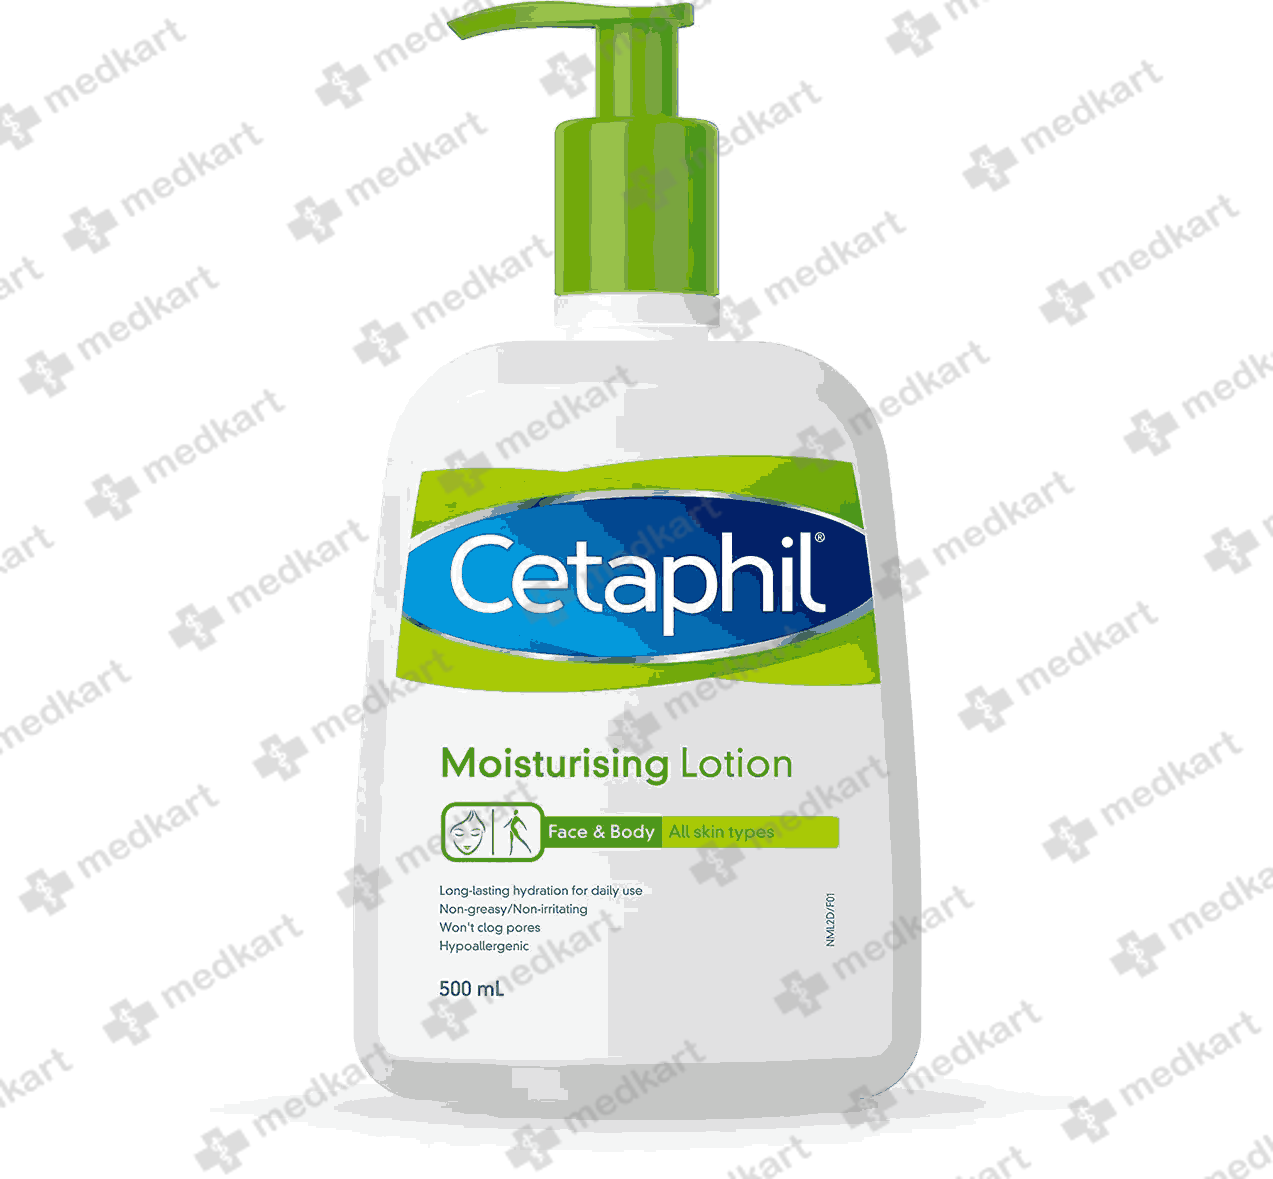 cetaphil-moist-lotion-500-ml